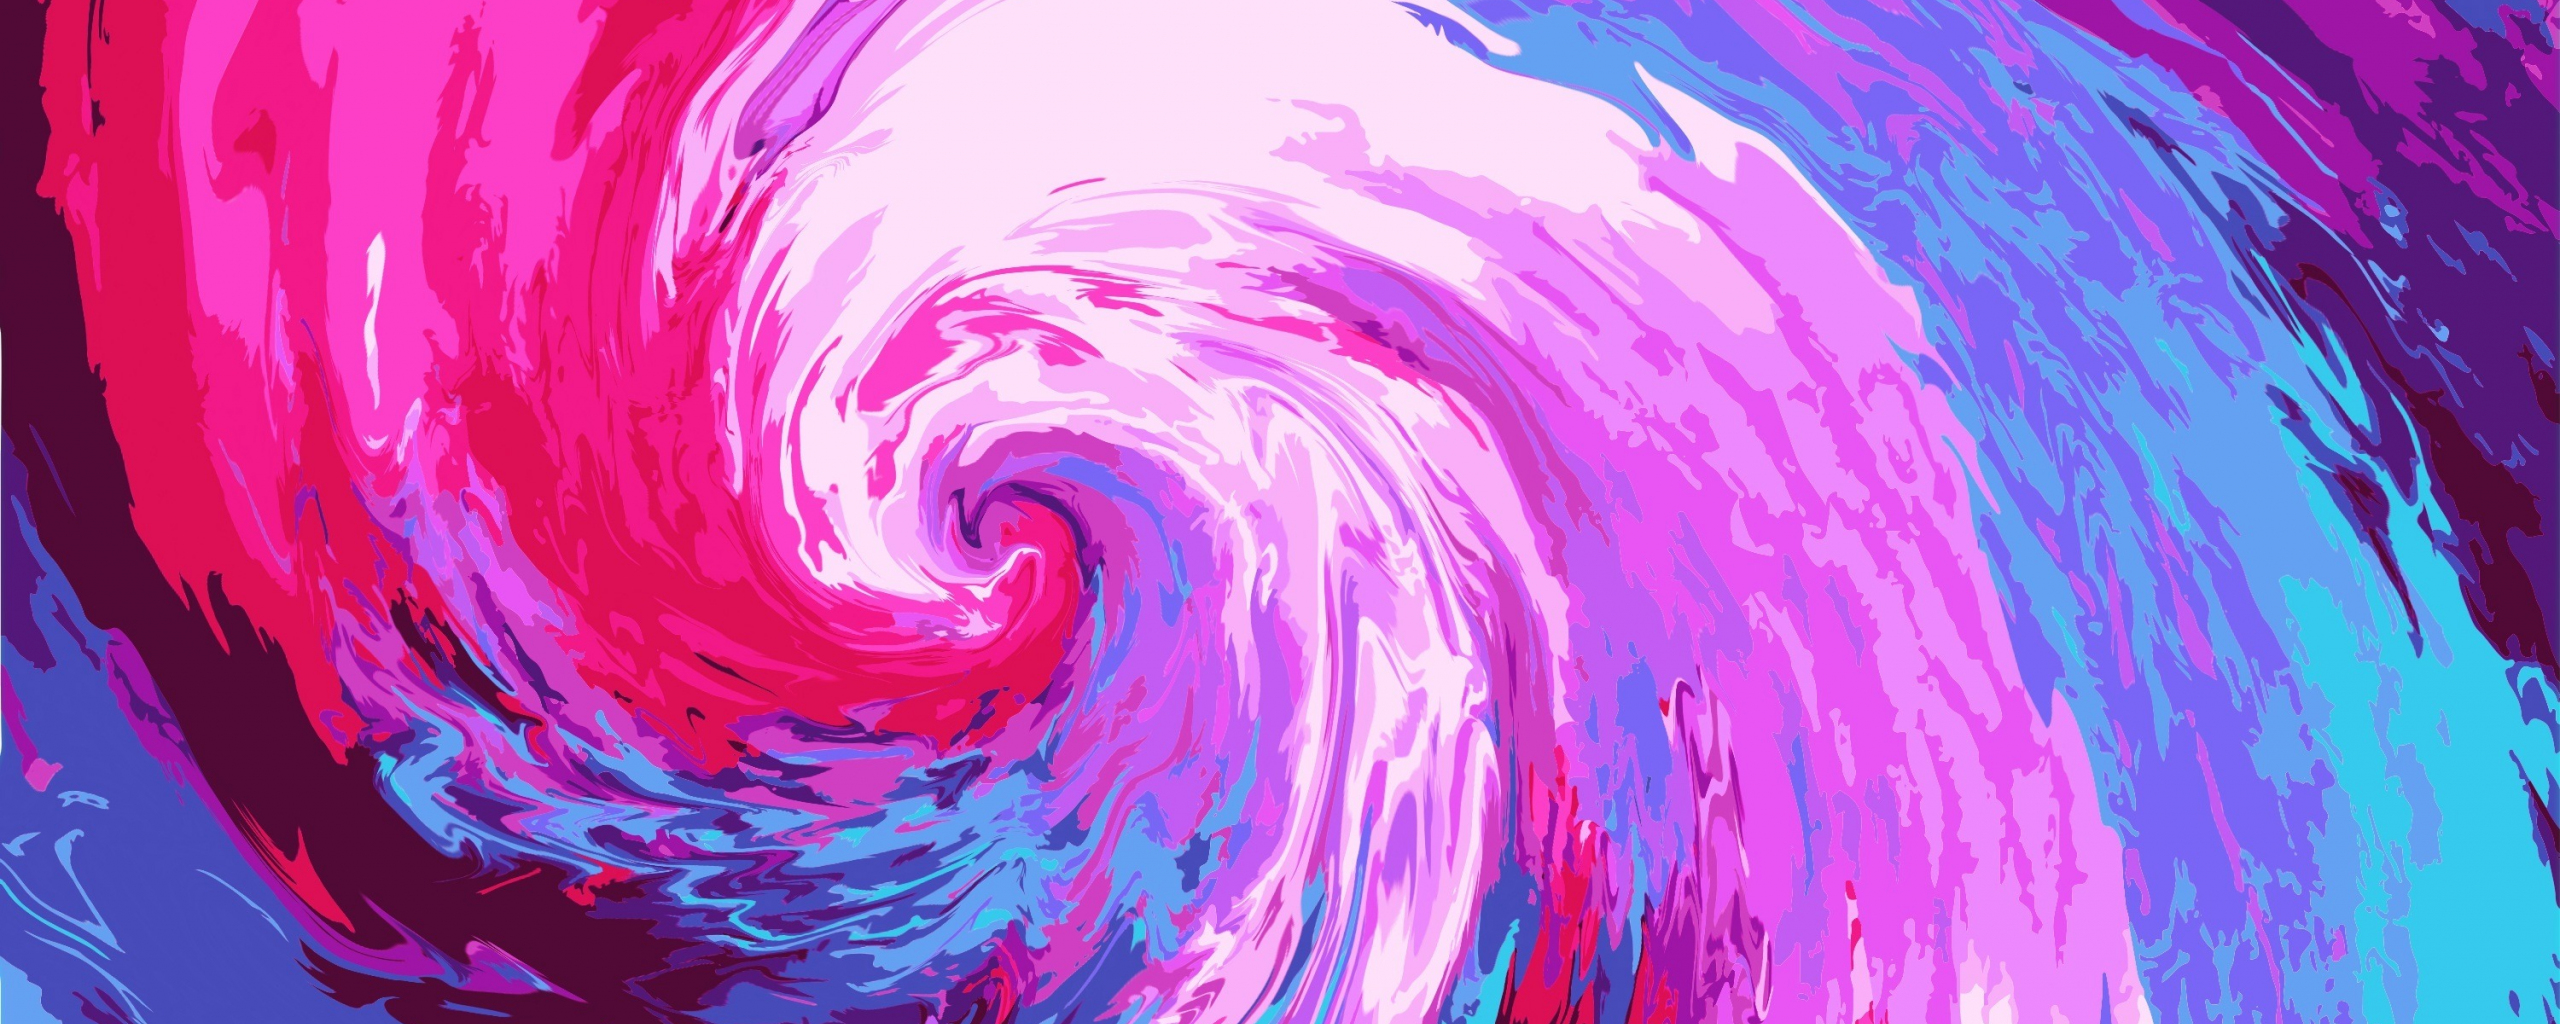 Swirl, abstract, glitch art, 2560x1024 wallpaper